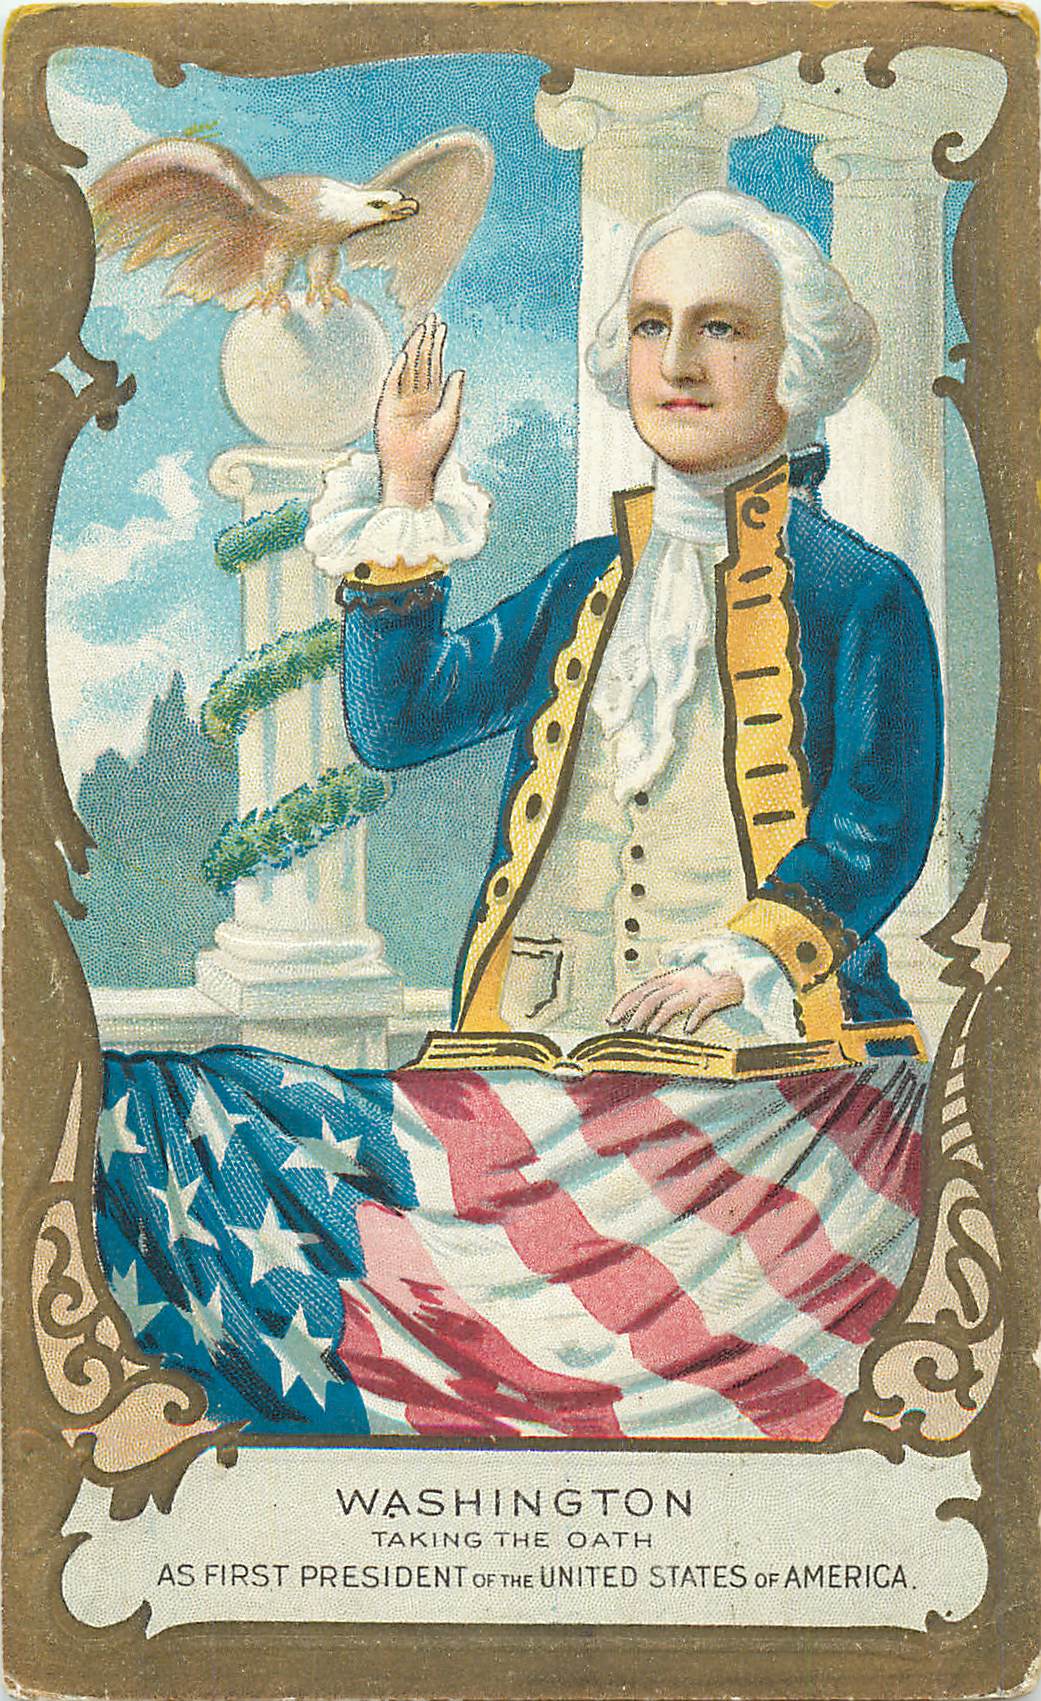 "Washington Taking the Oath"